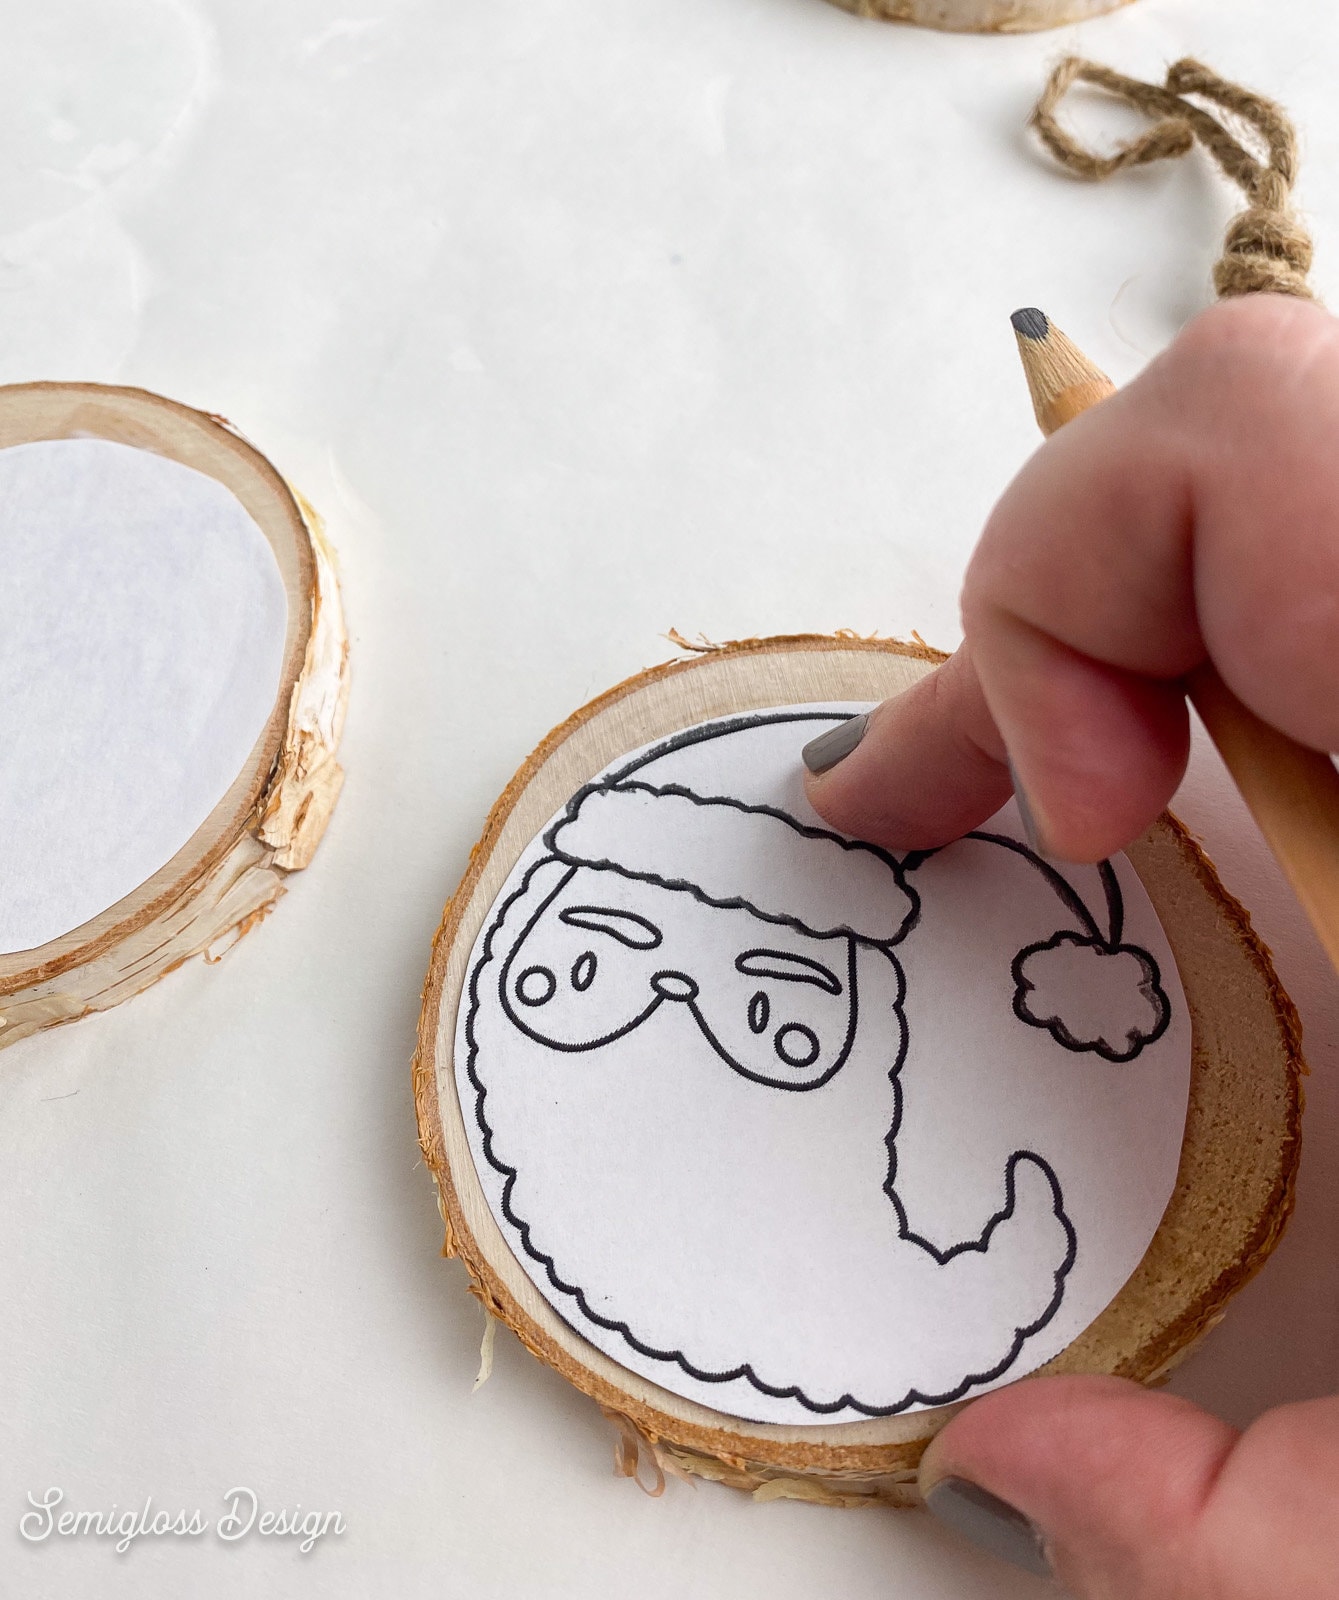 tracing image of Santa on ornament